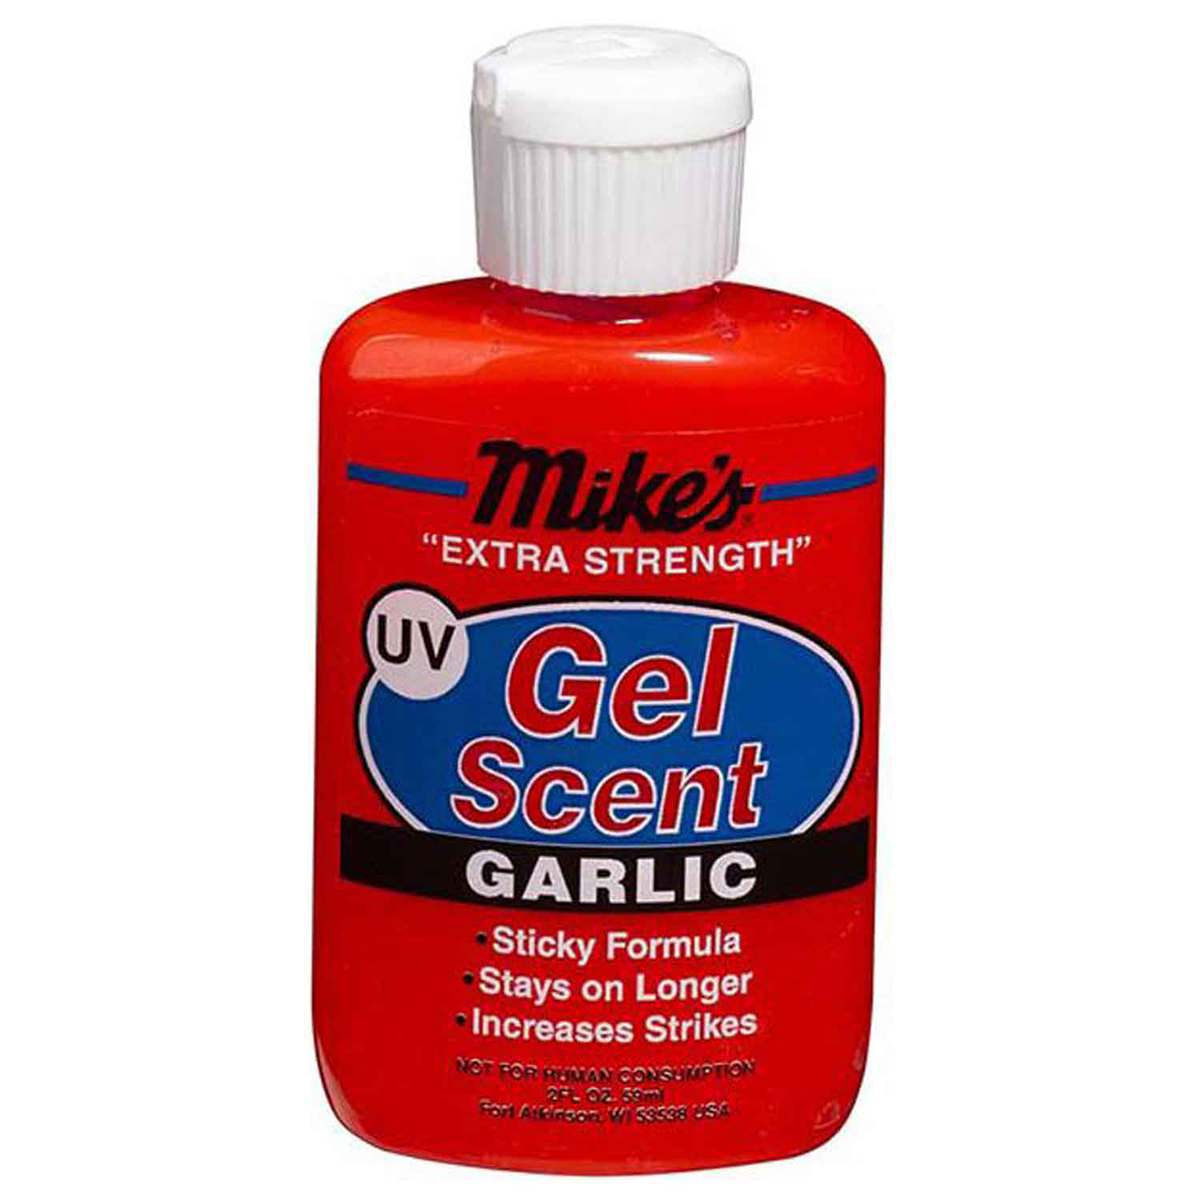 Mike's UV Gel Scent Garlic